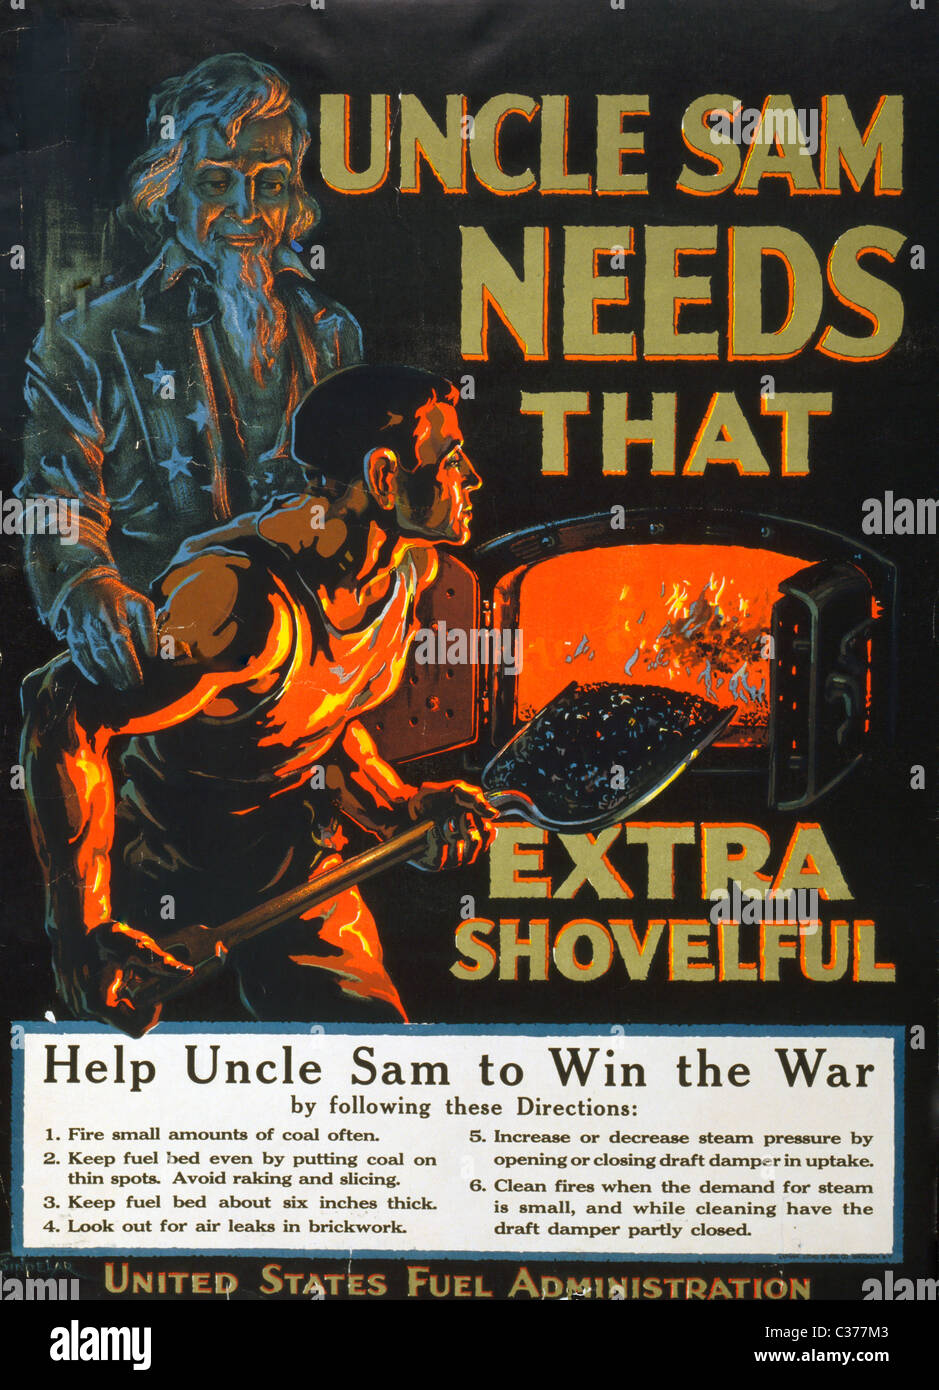 Uncle Sam needs that extra shovelful - WWI Poster - USA Stock Photo